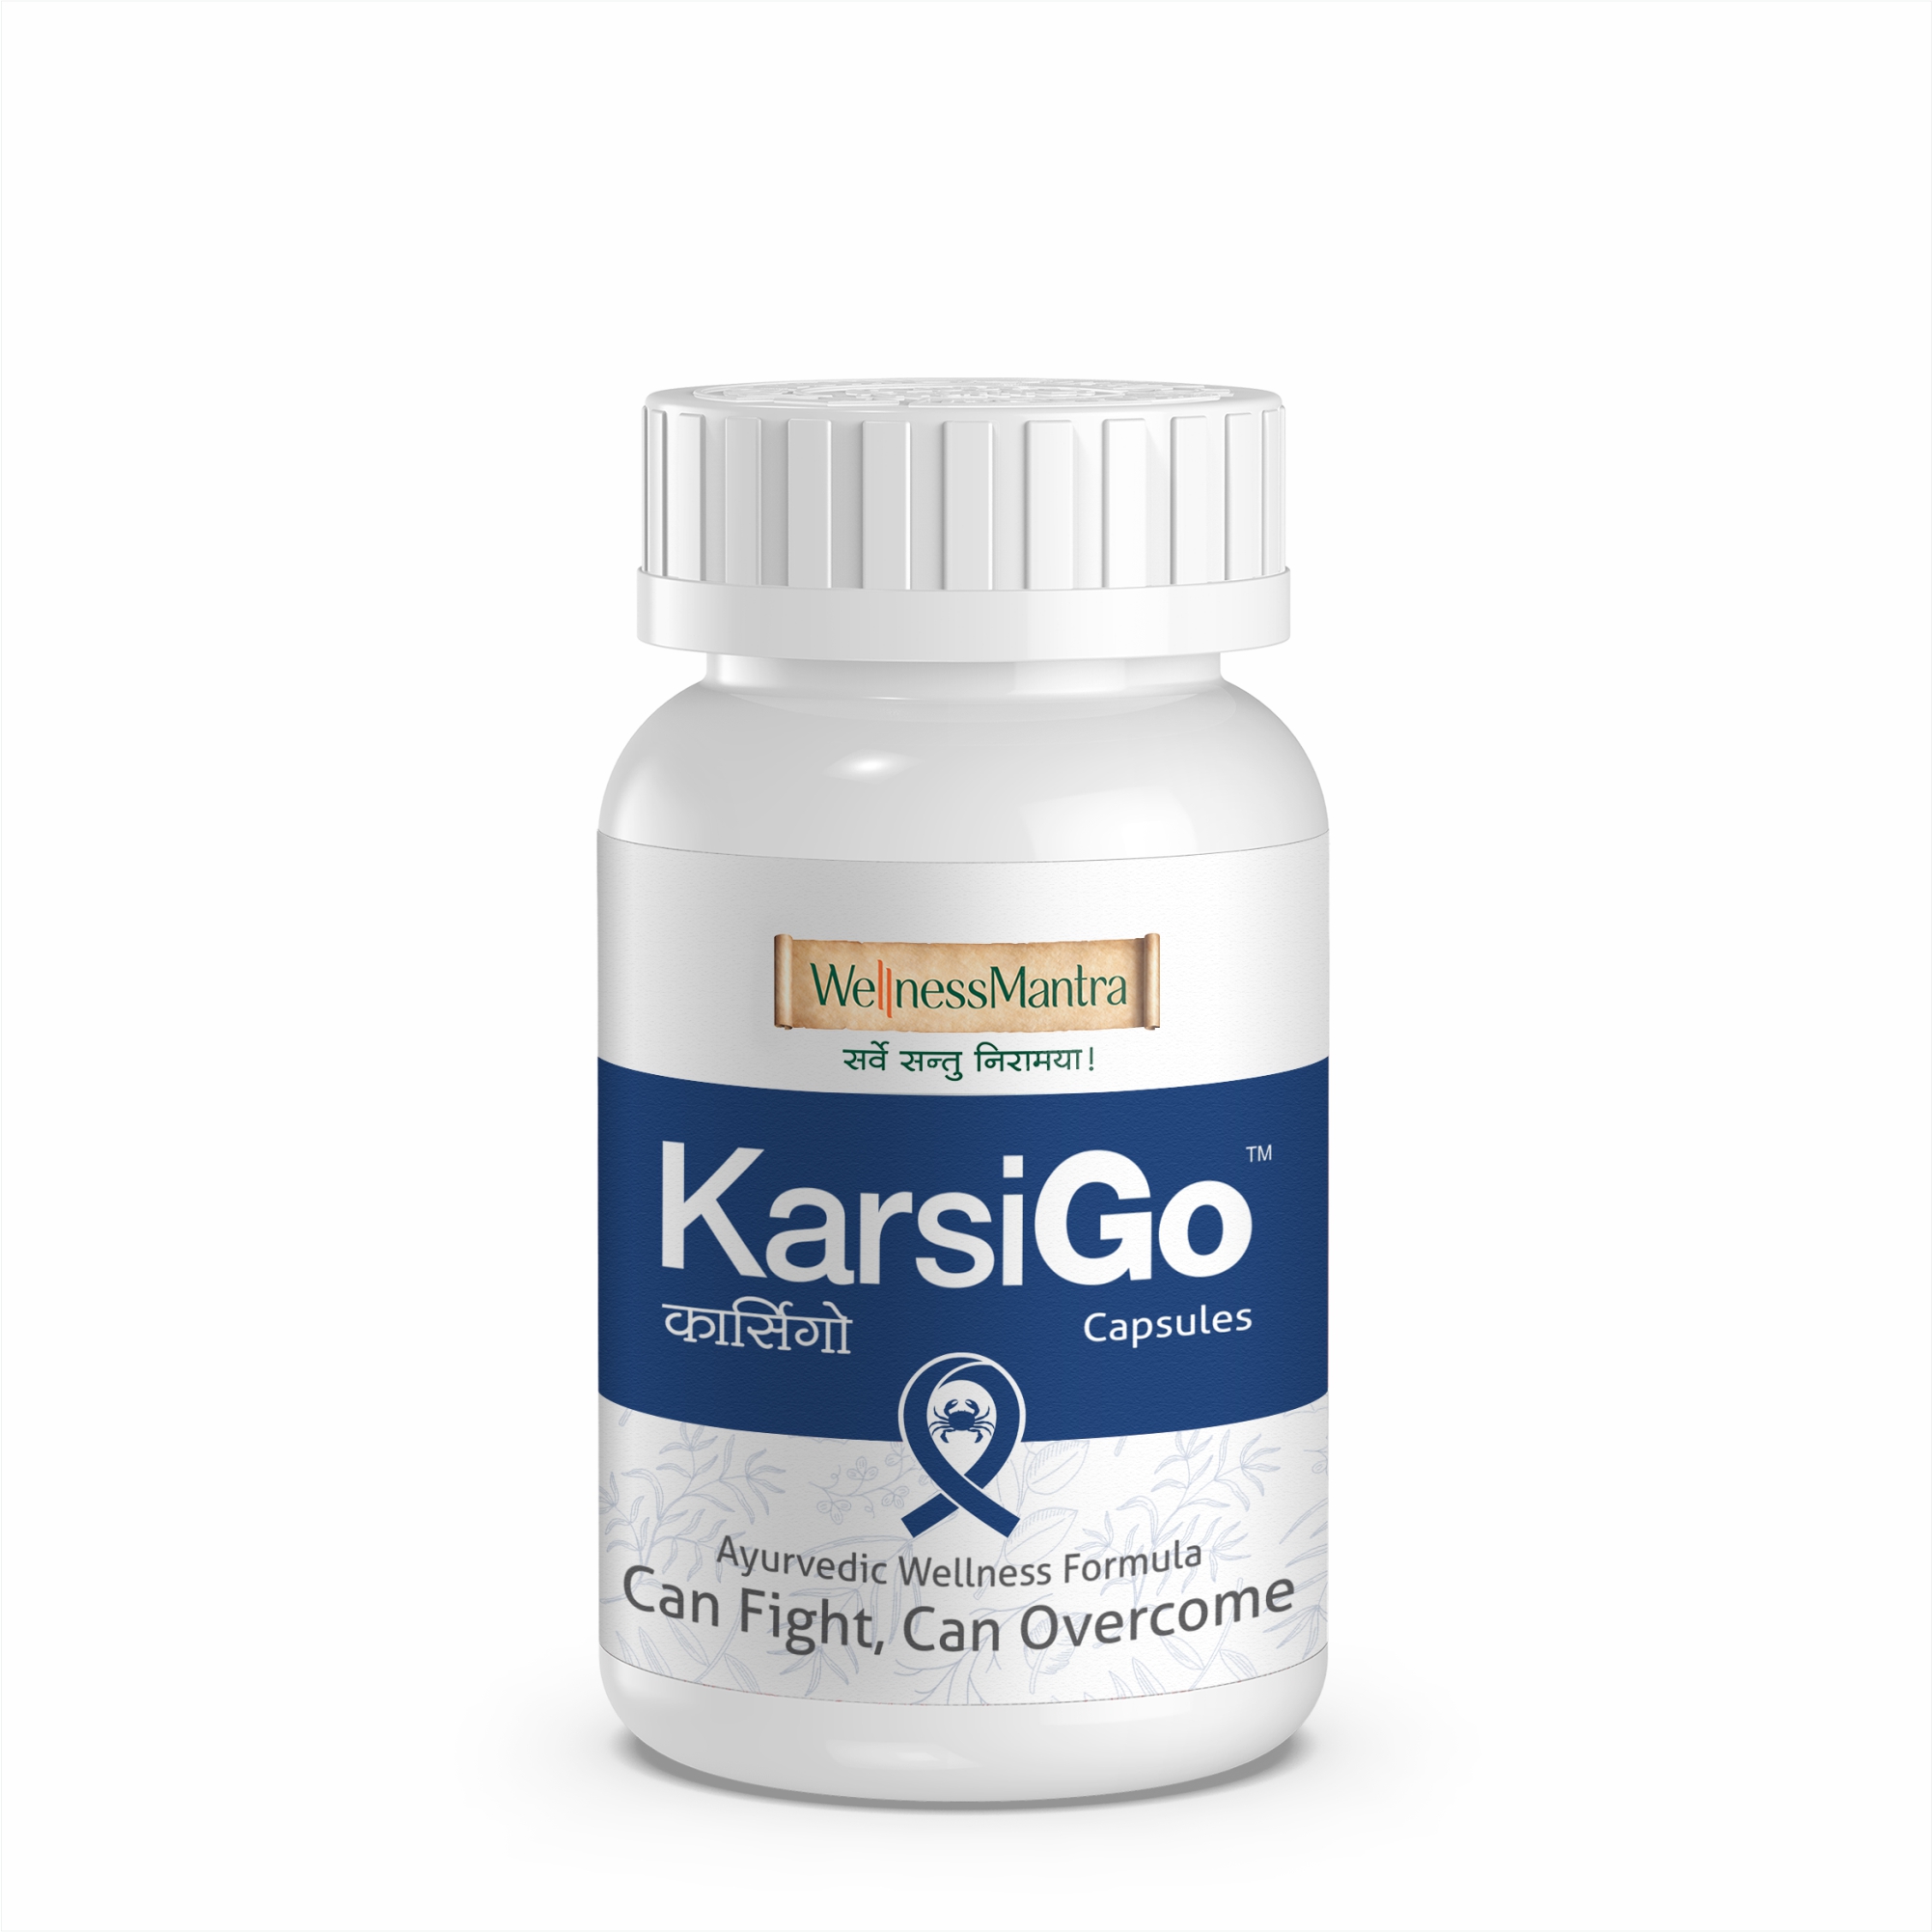 Buy Wellness Mantra KarsiGo Capsules at Best Price Online